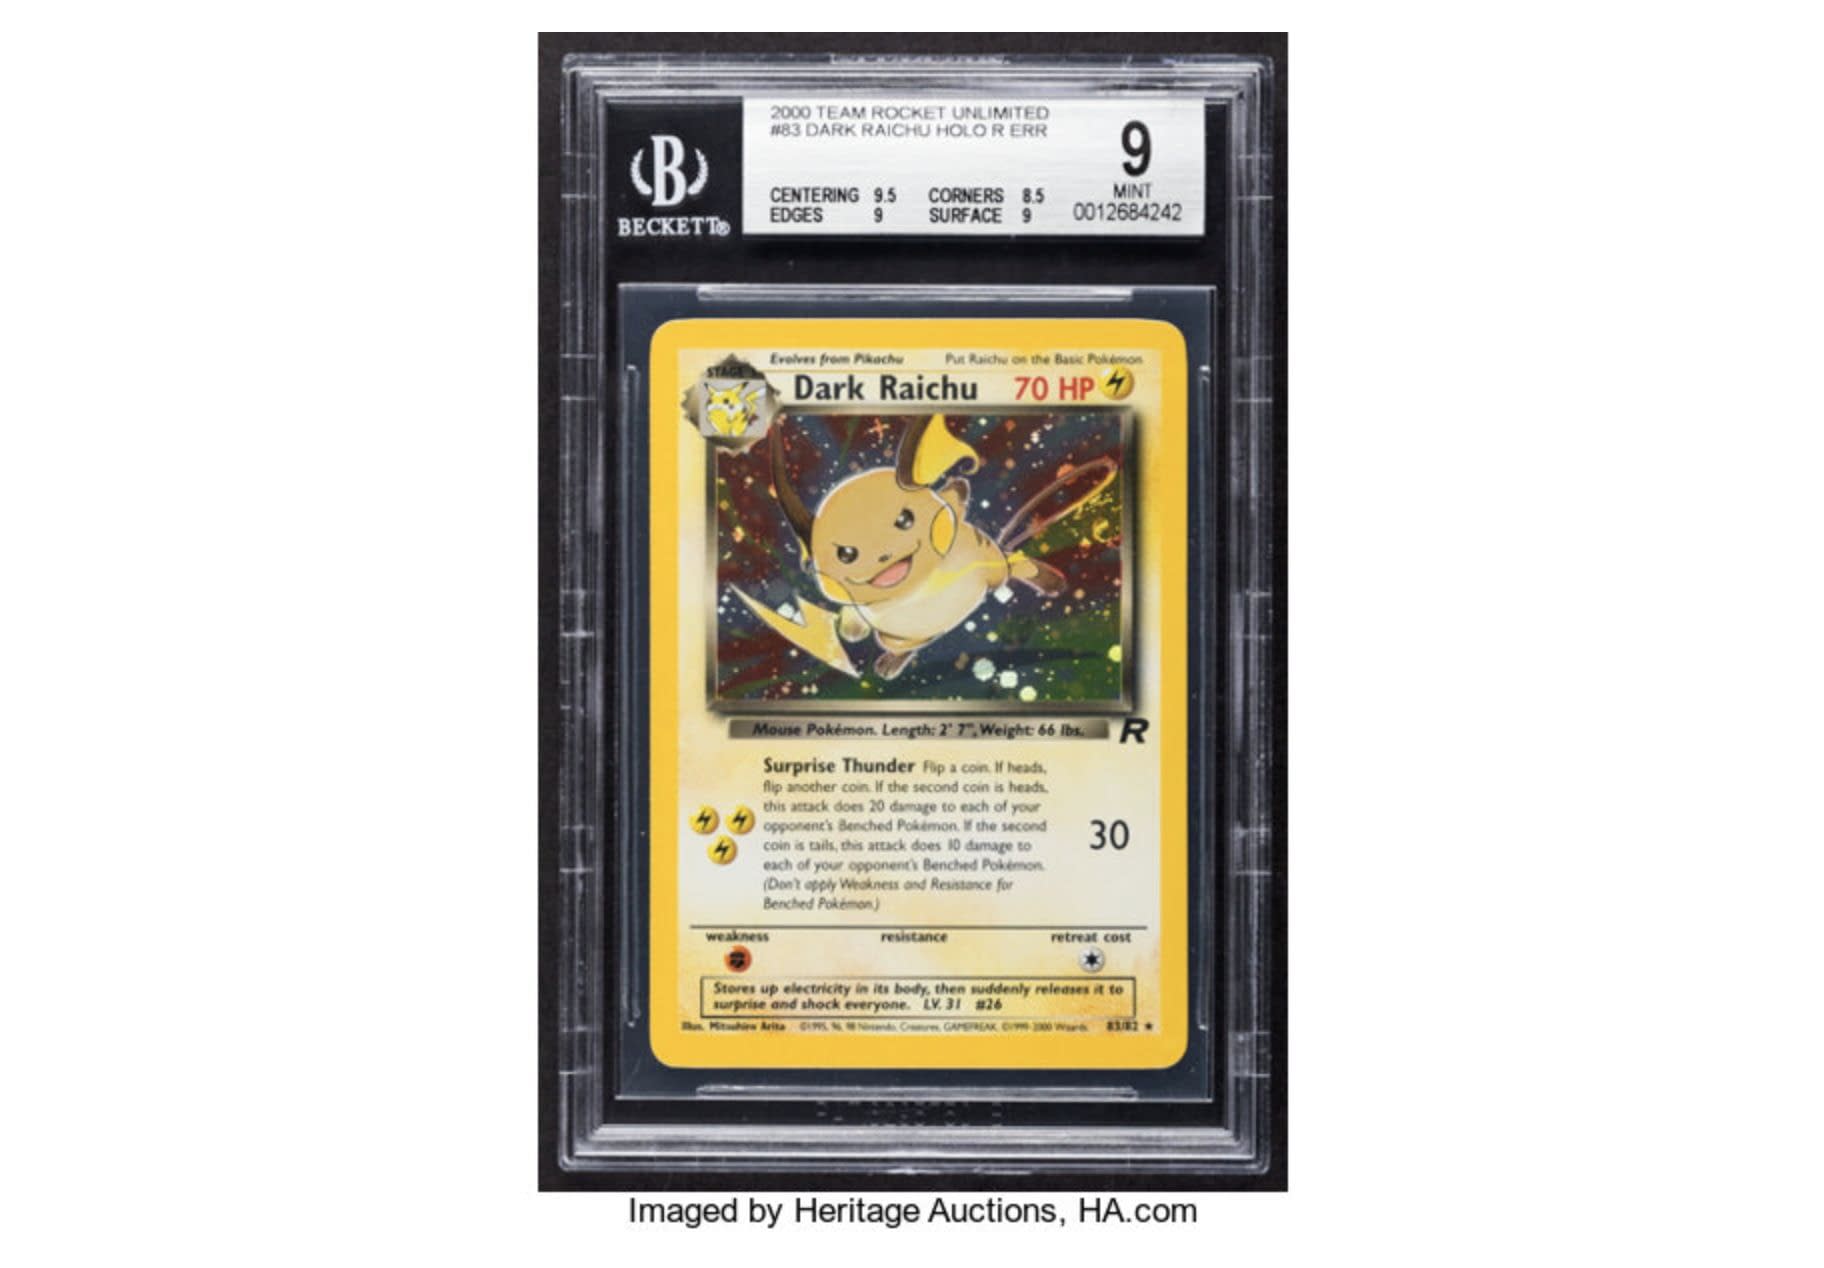 Rare first-edition Pokémon card sells for $336,000 – KIRO 7 News Seattle